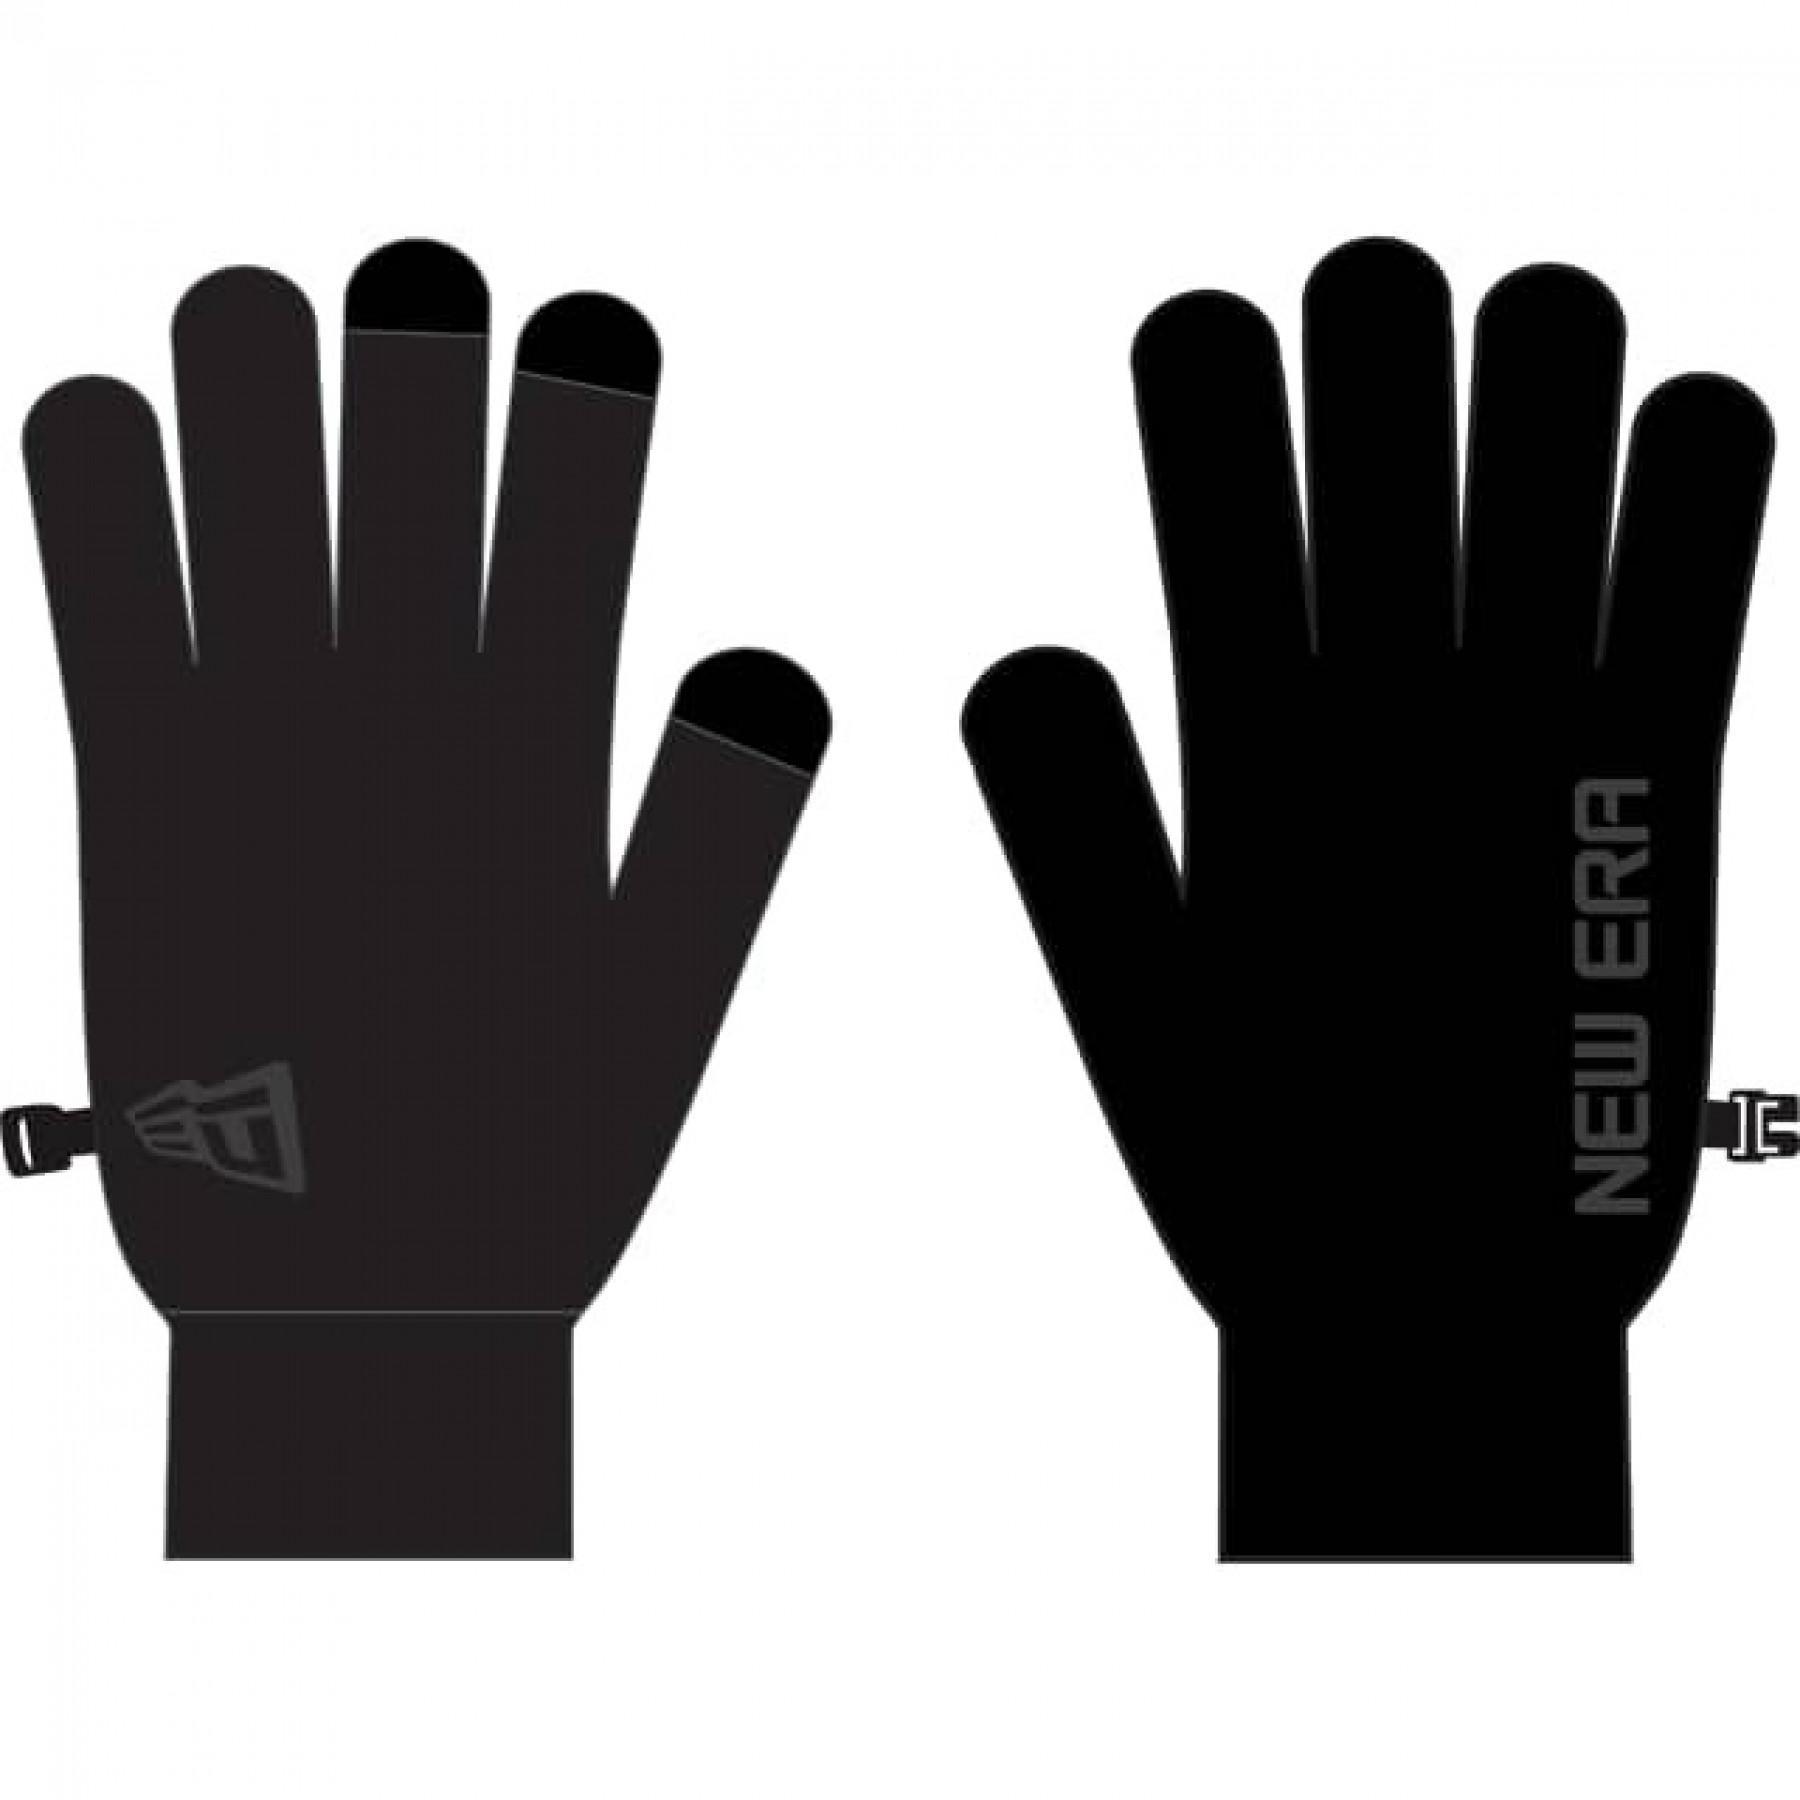 Handschuhe New Era Electronic Touch